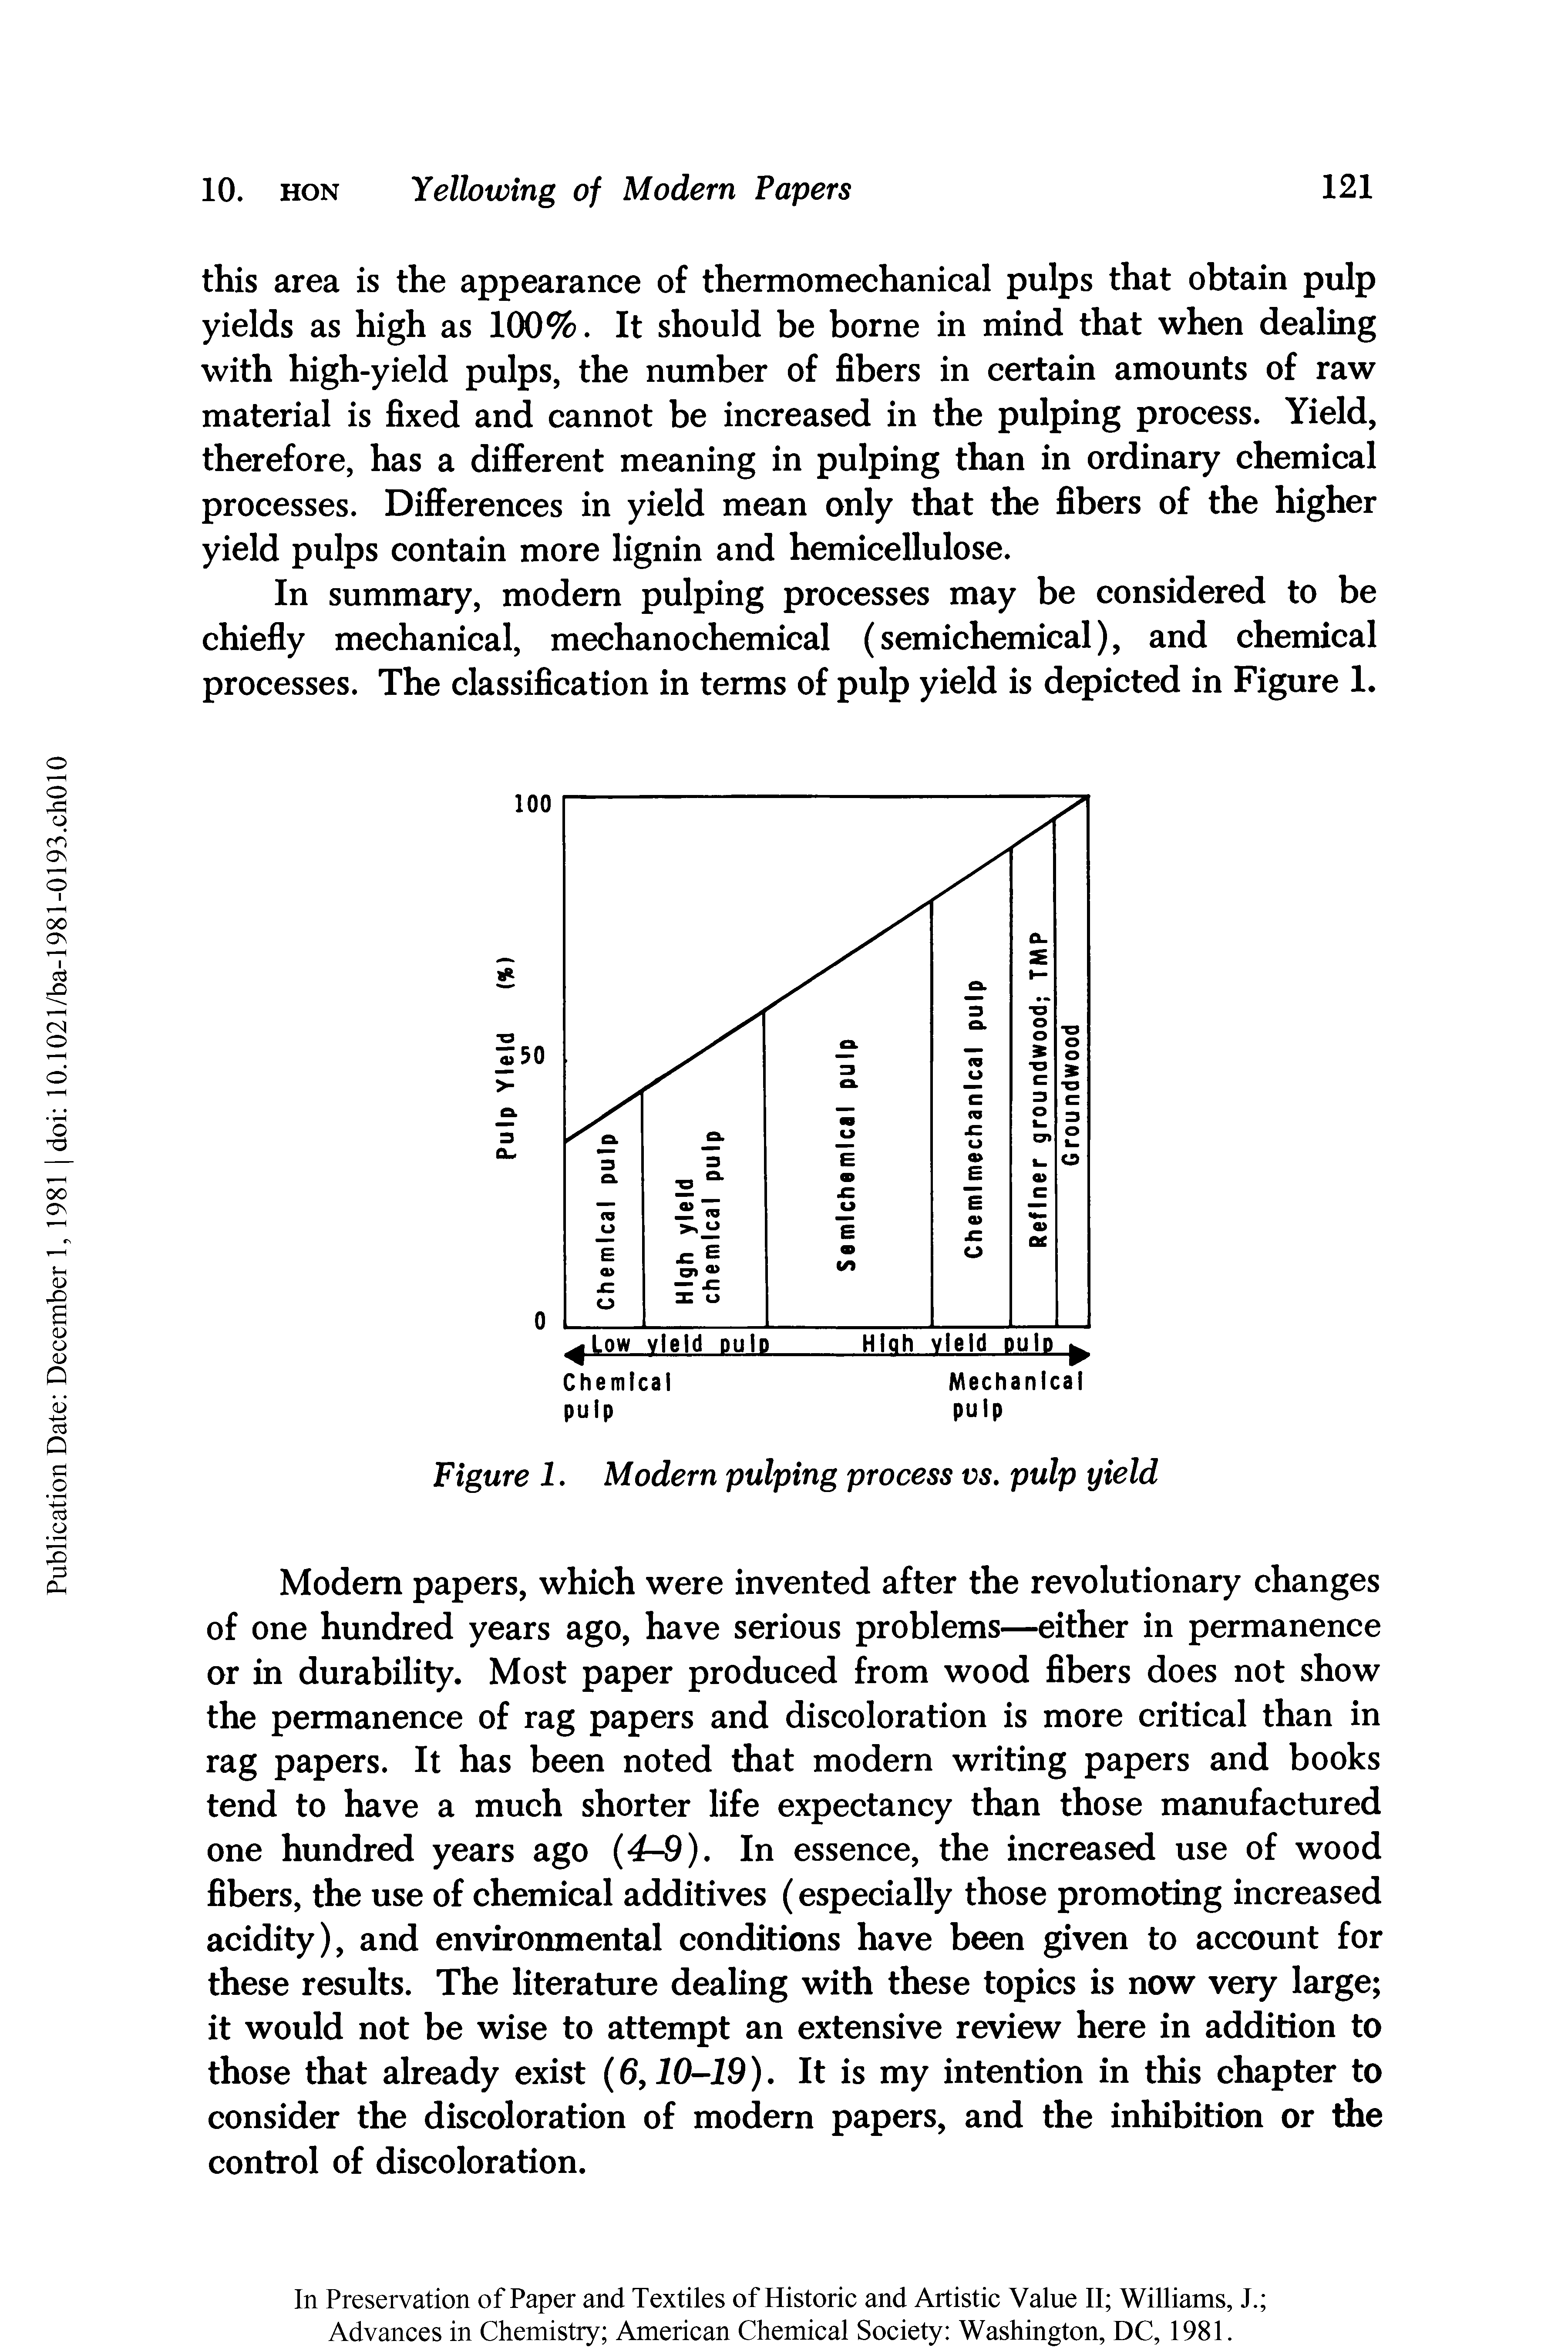 Figure 1. Modern pulping process vs. pulp yield...